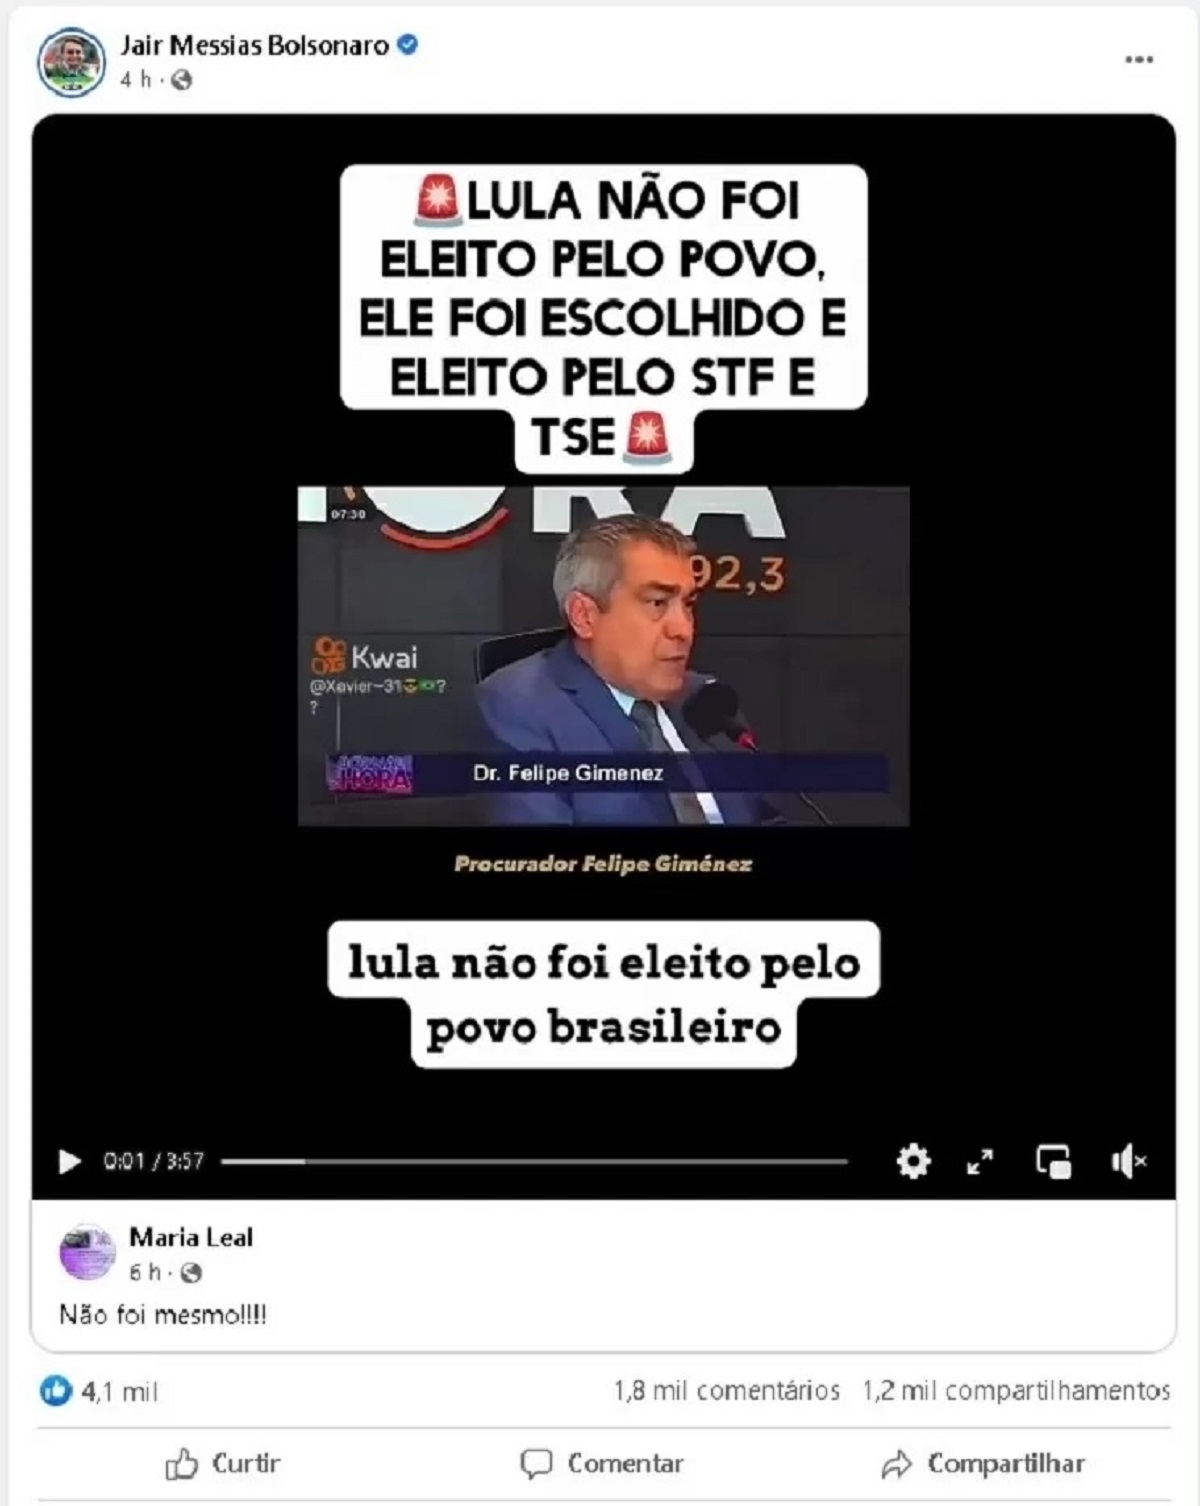 Post publicado pelo perfil de Jair Bolsonaro